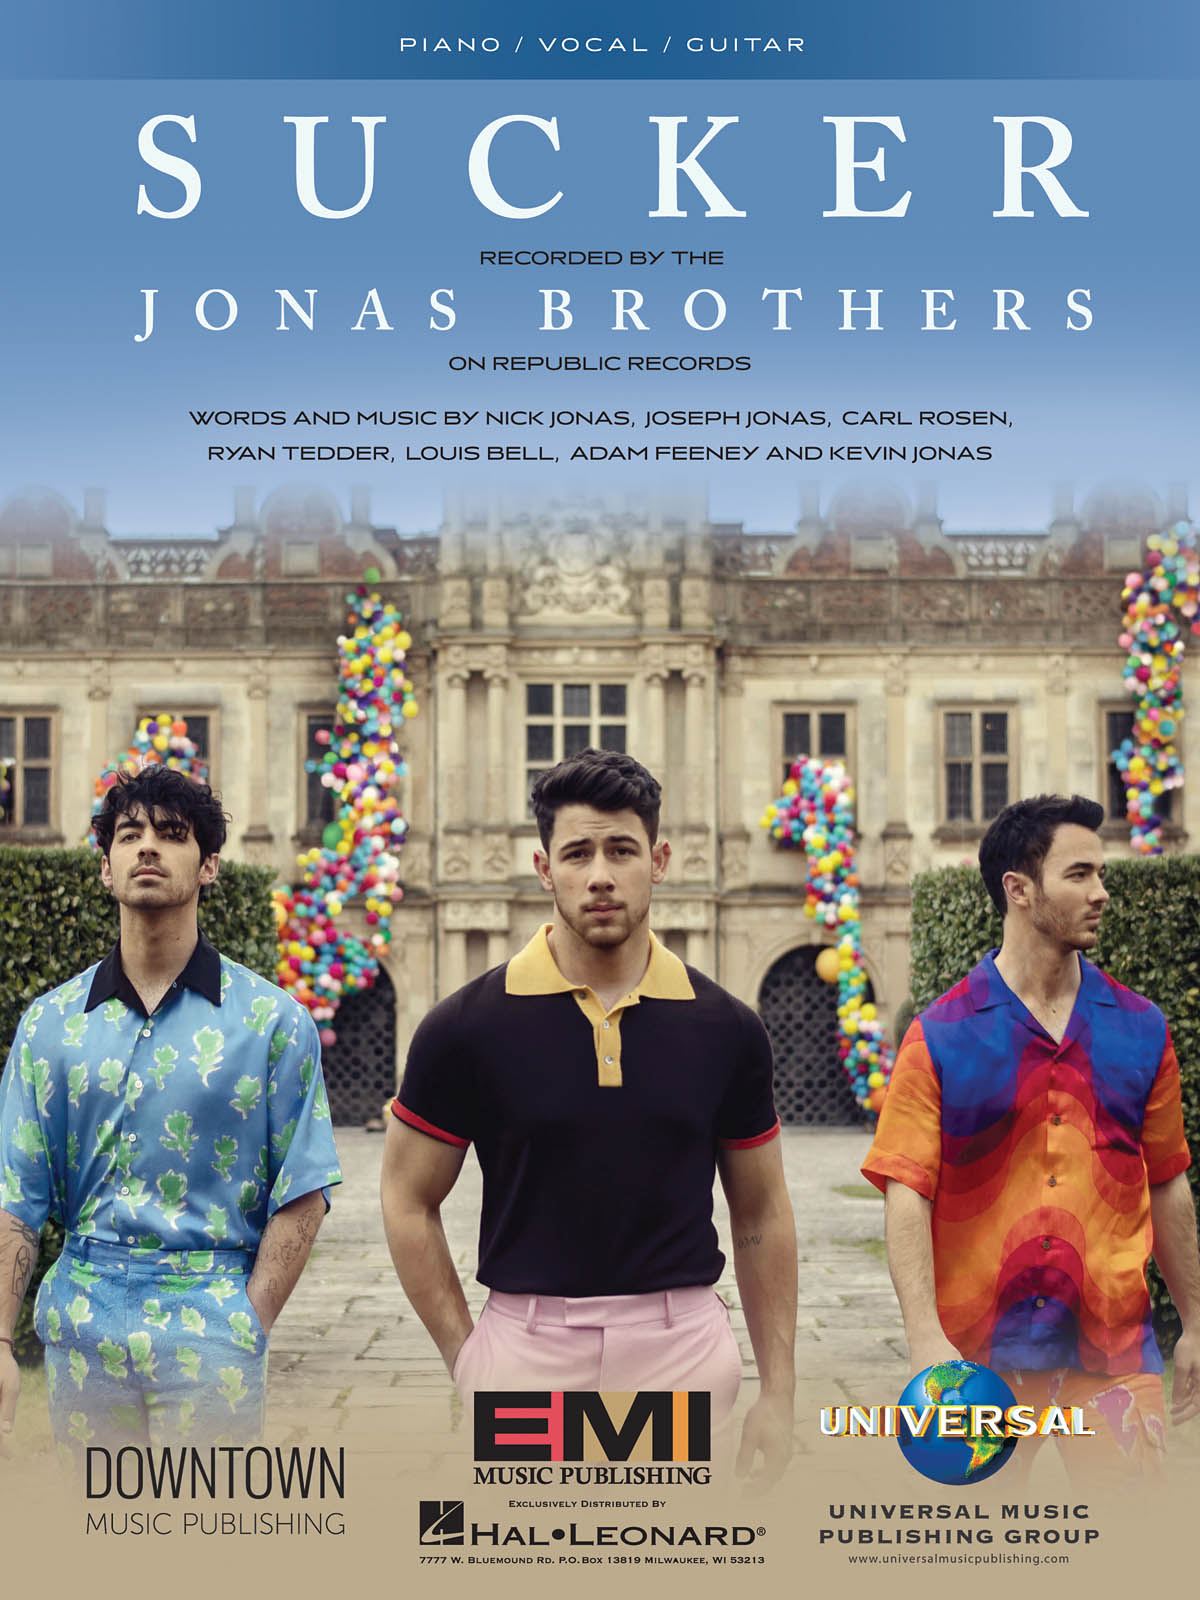 Jonas Brothers: Jonas Brothers - Sucker: Vocal and Piano: Single Sheet